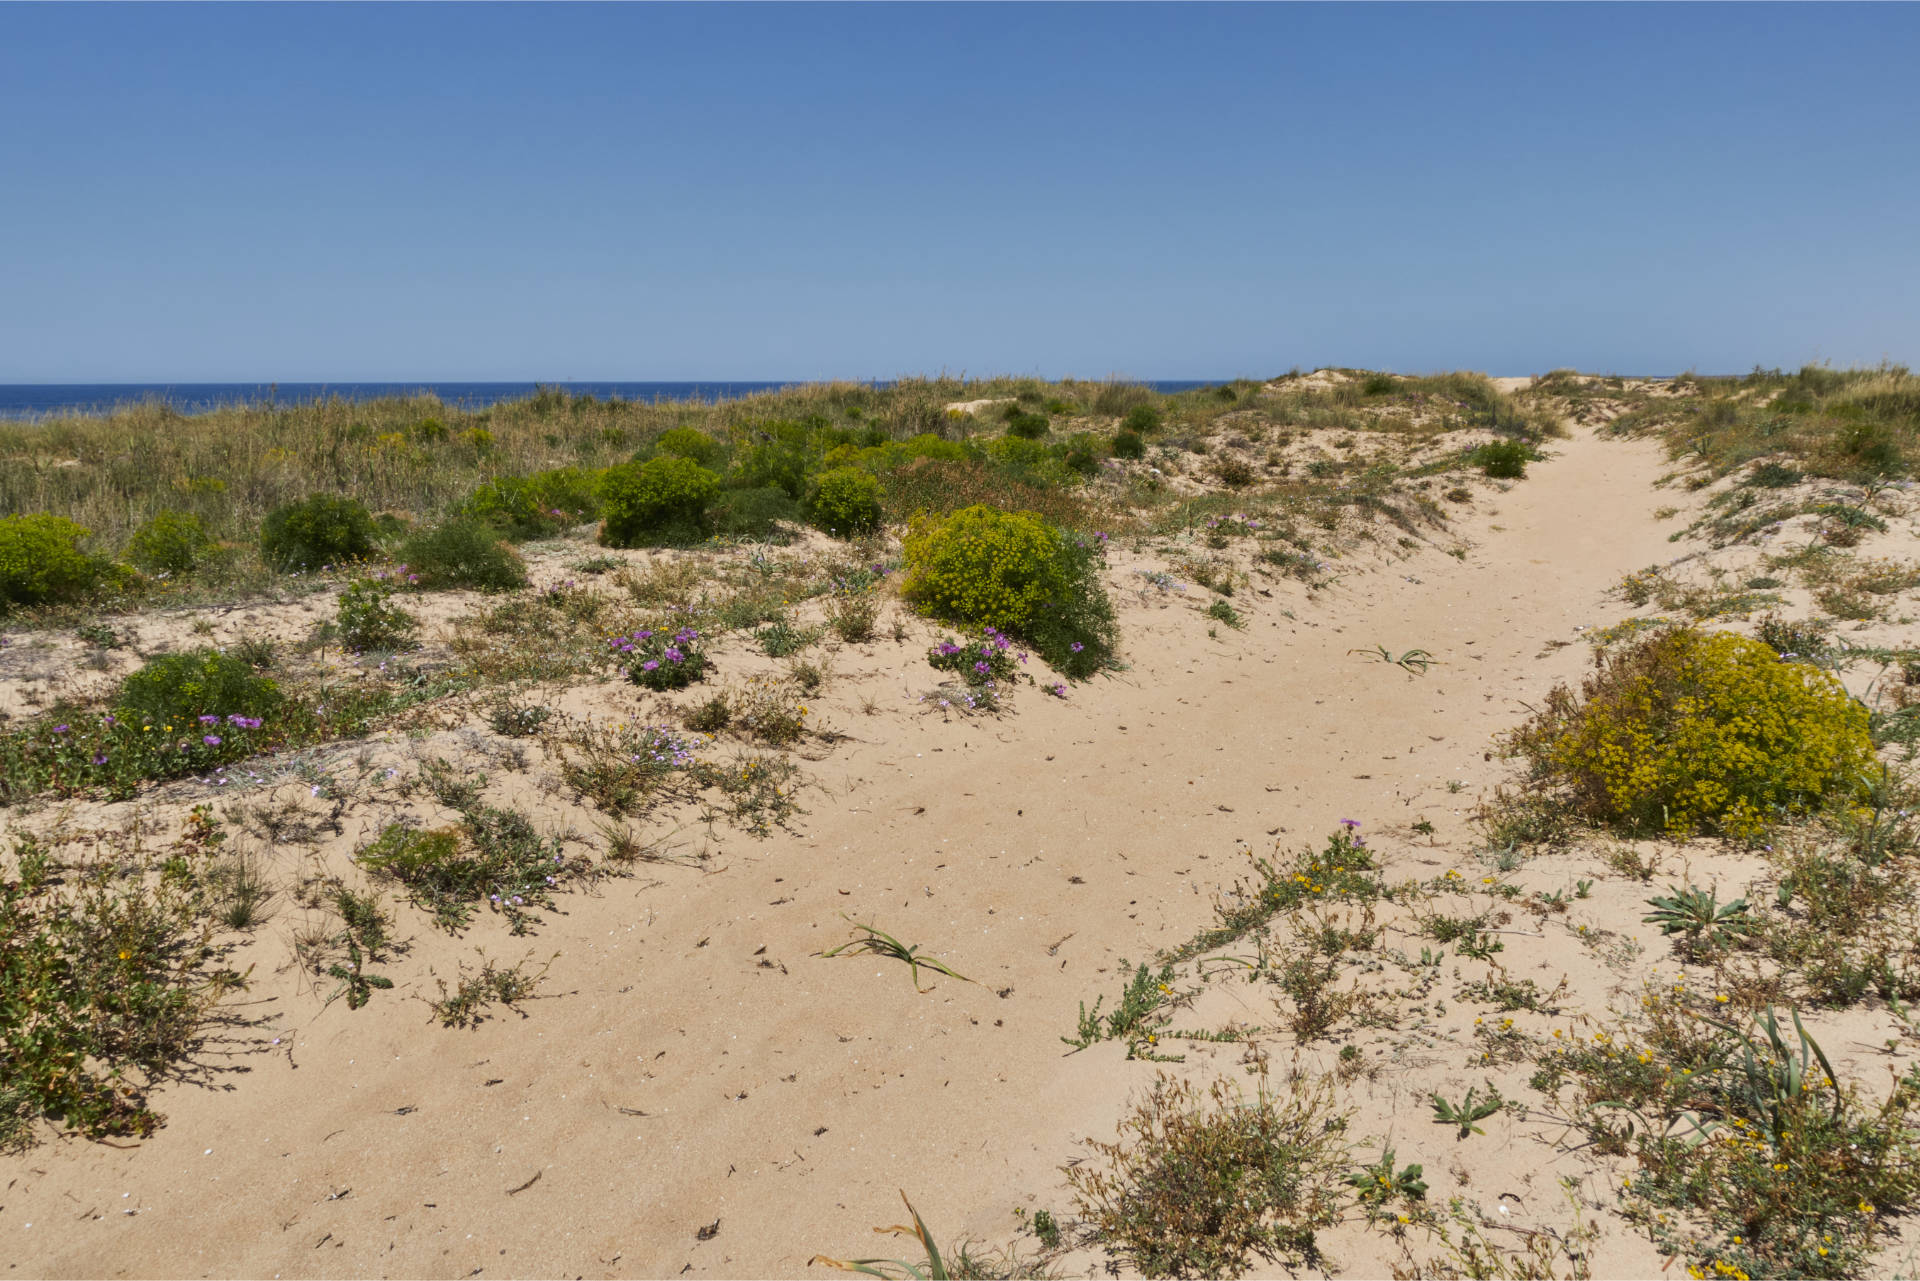 Tiefer Sand am Trail Richtung El Atunar.